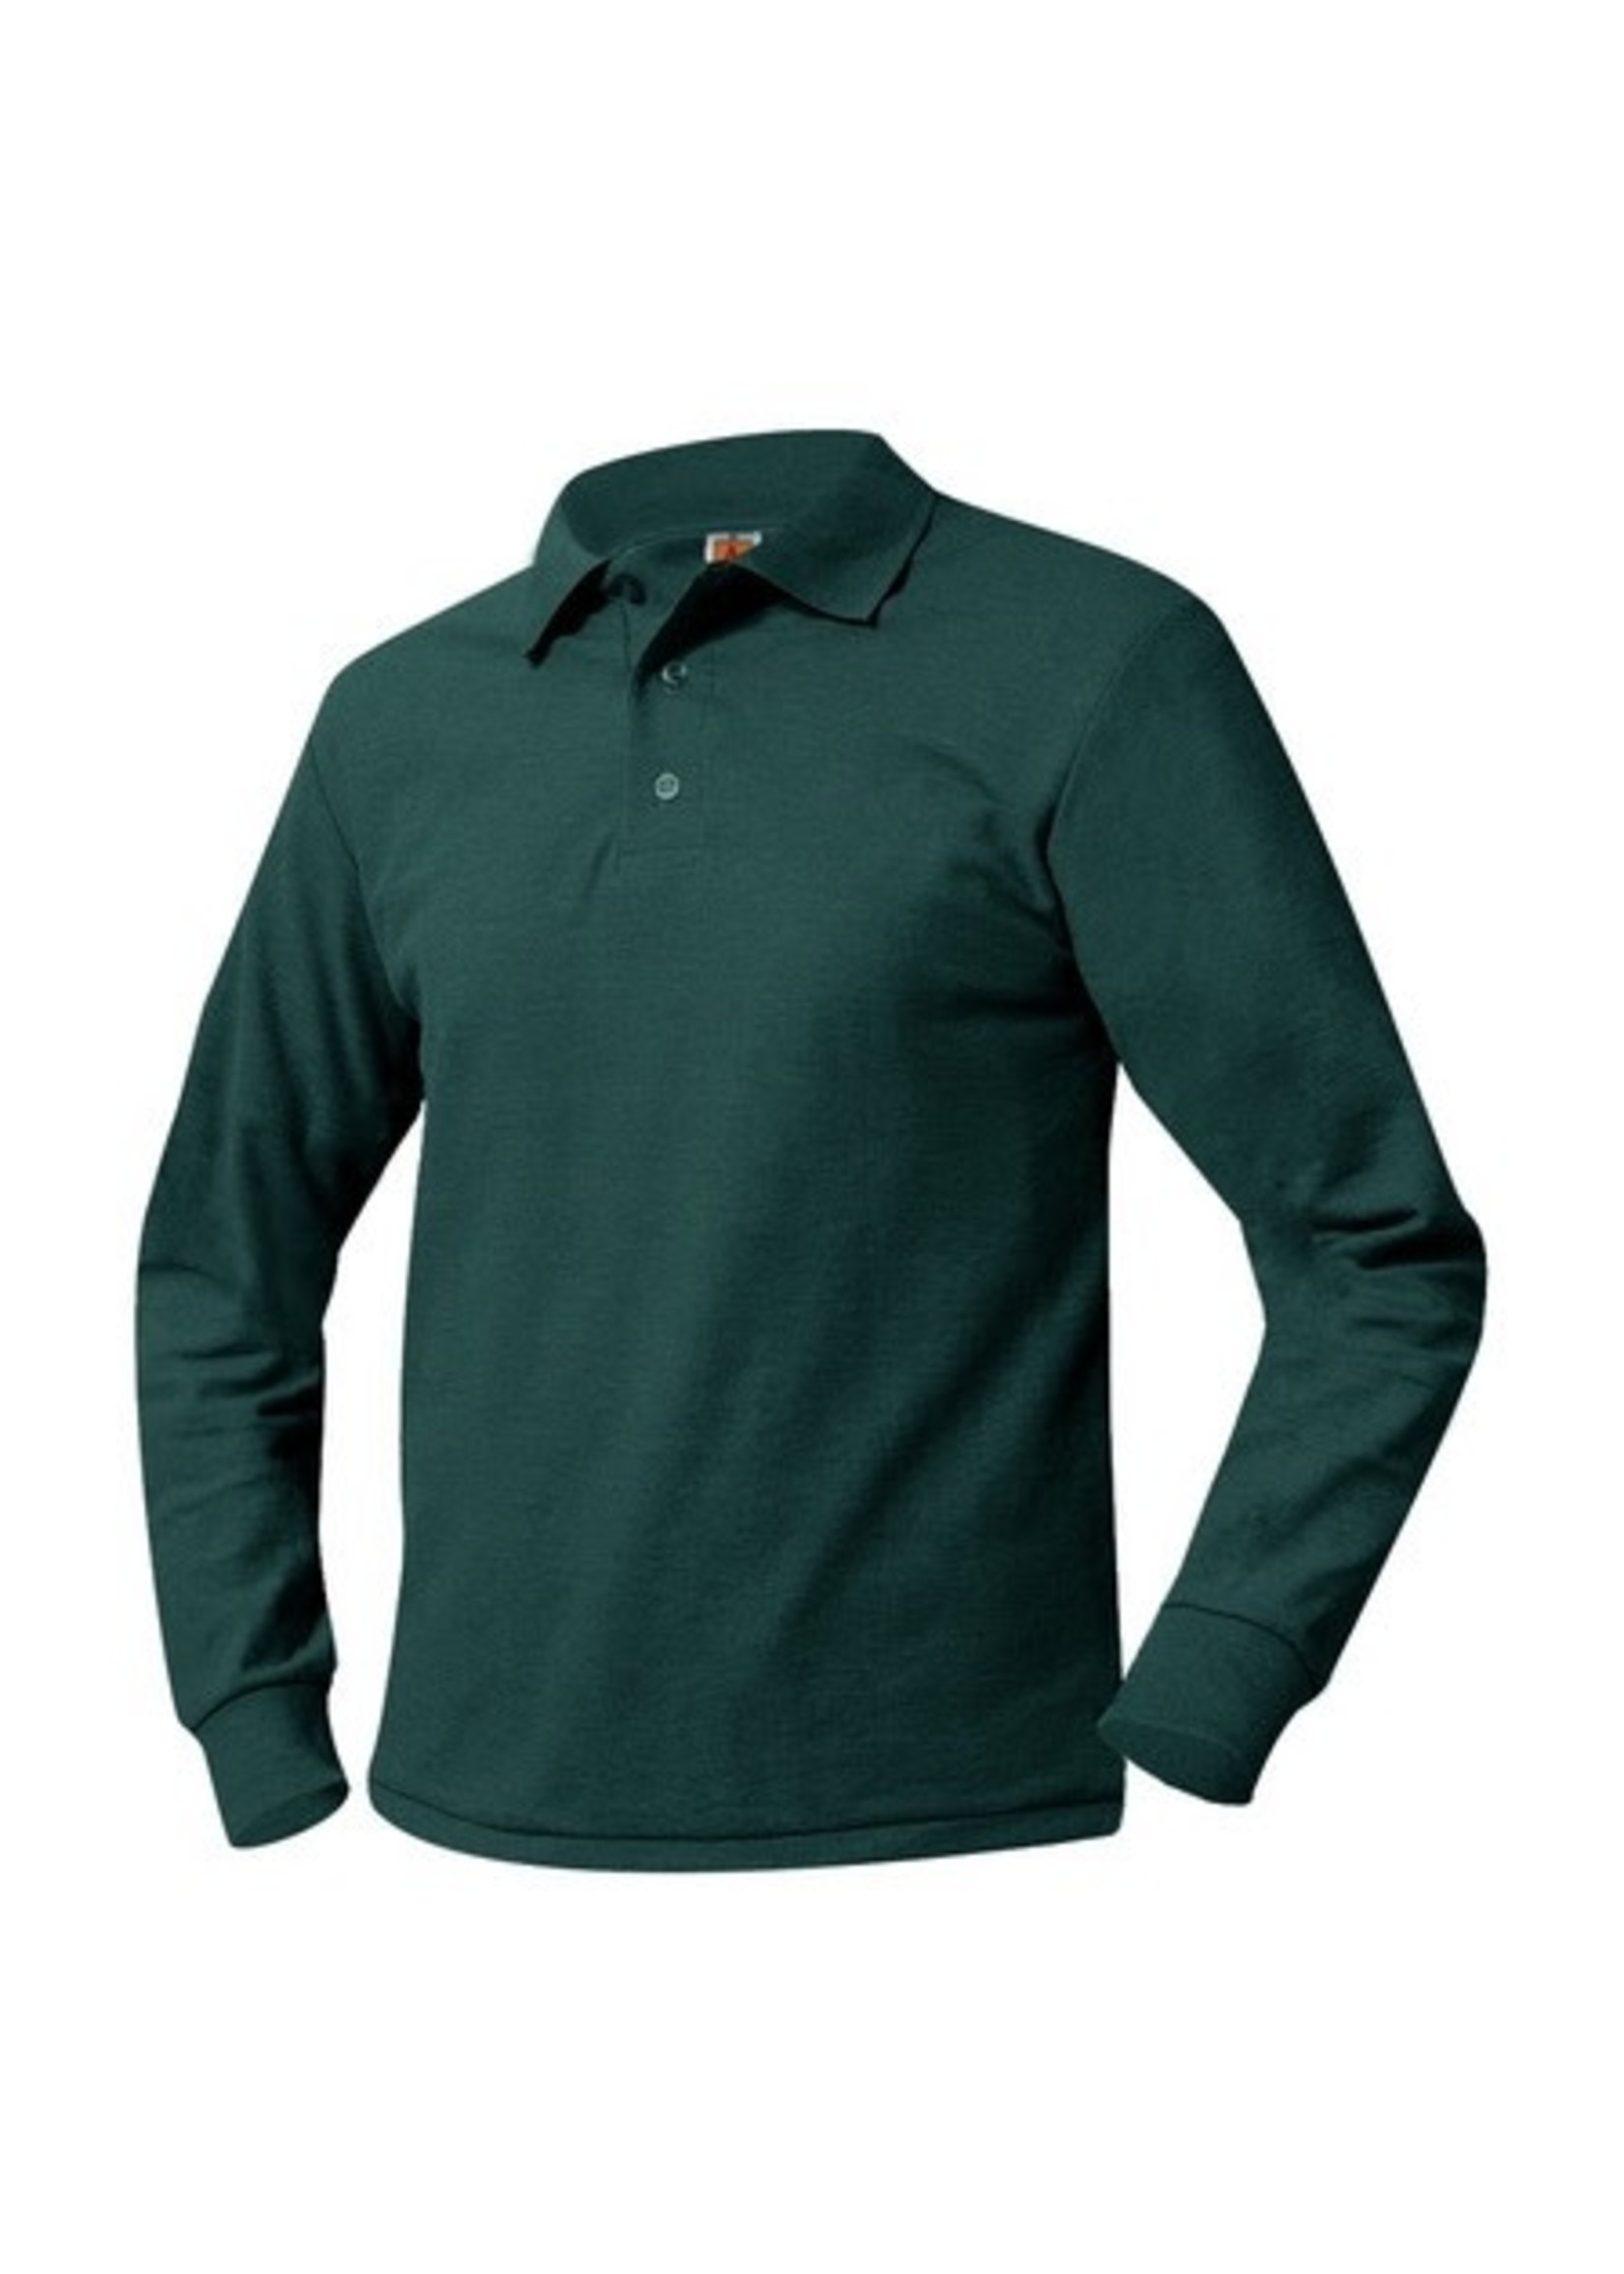 UNIFORM CLOSEOUT - Pique Polo Long Sleeve Shirt, unisex